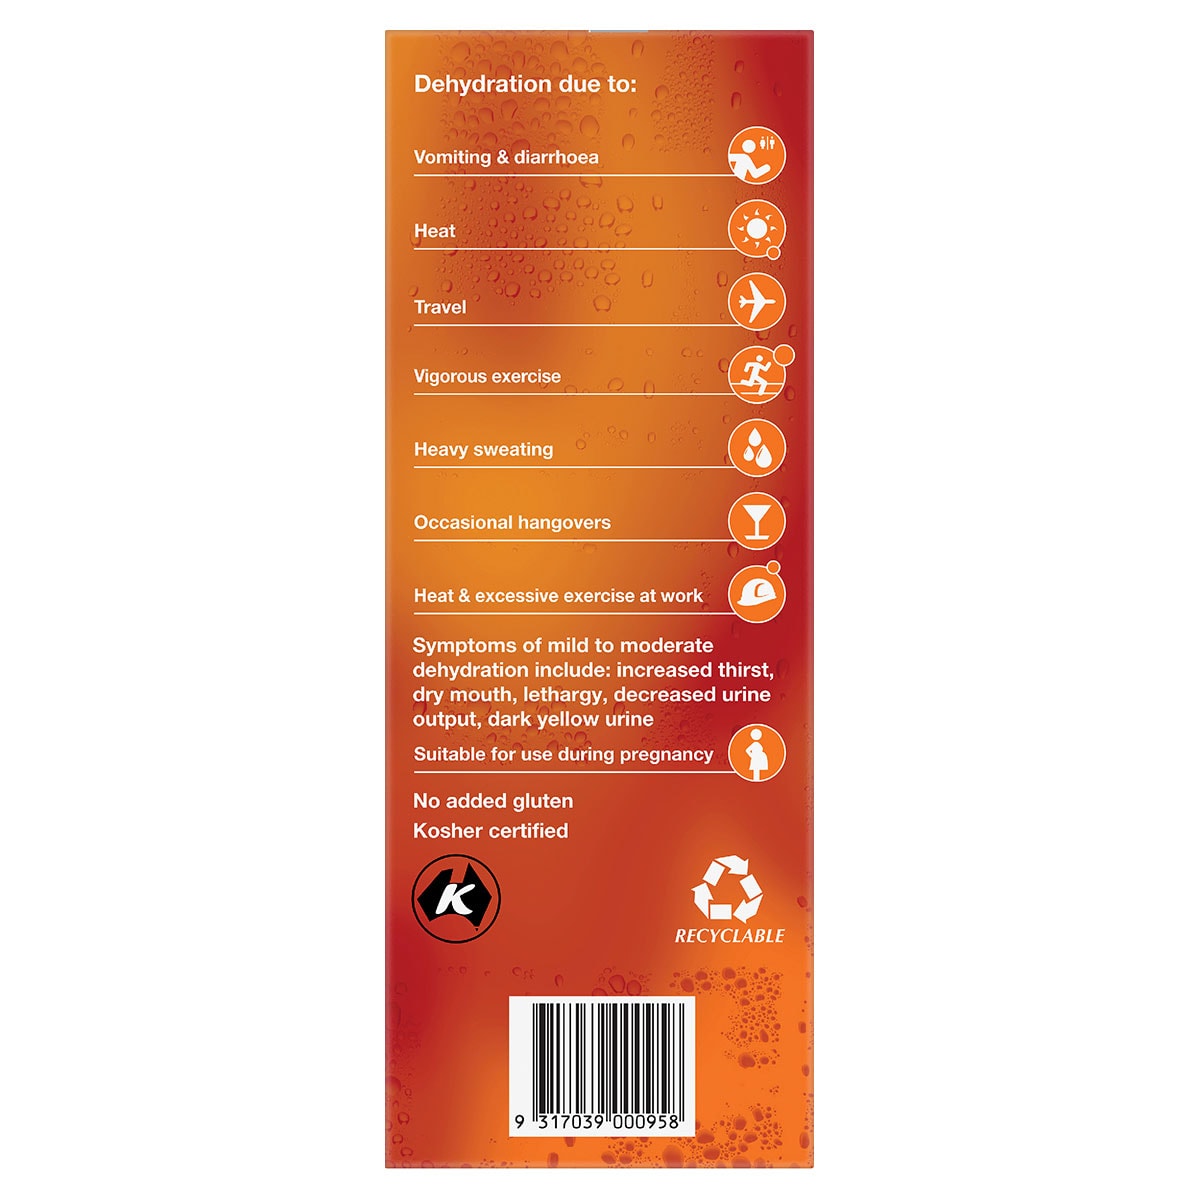 Hydralyte Electrolyte Ice Blocks Orange 16 Pack